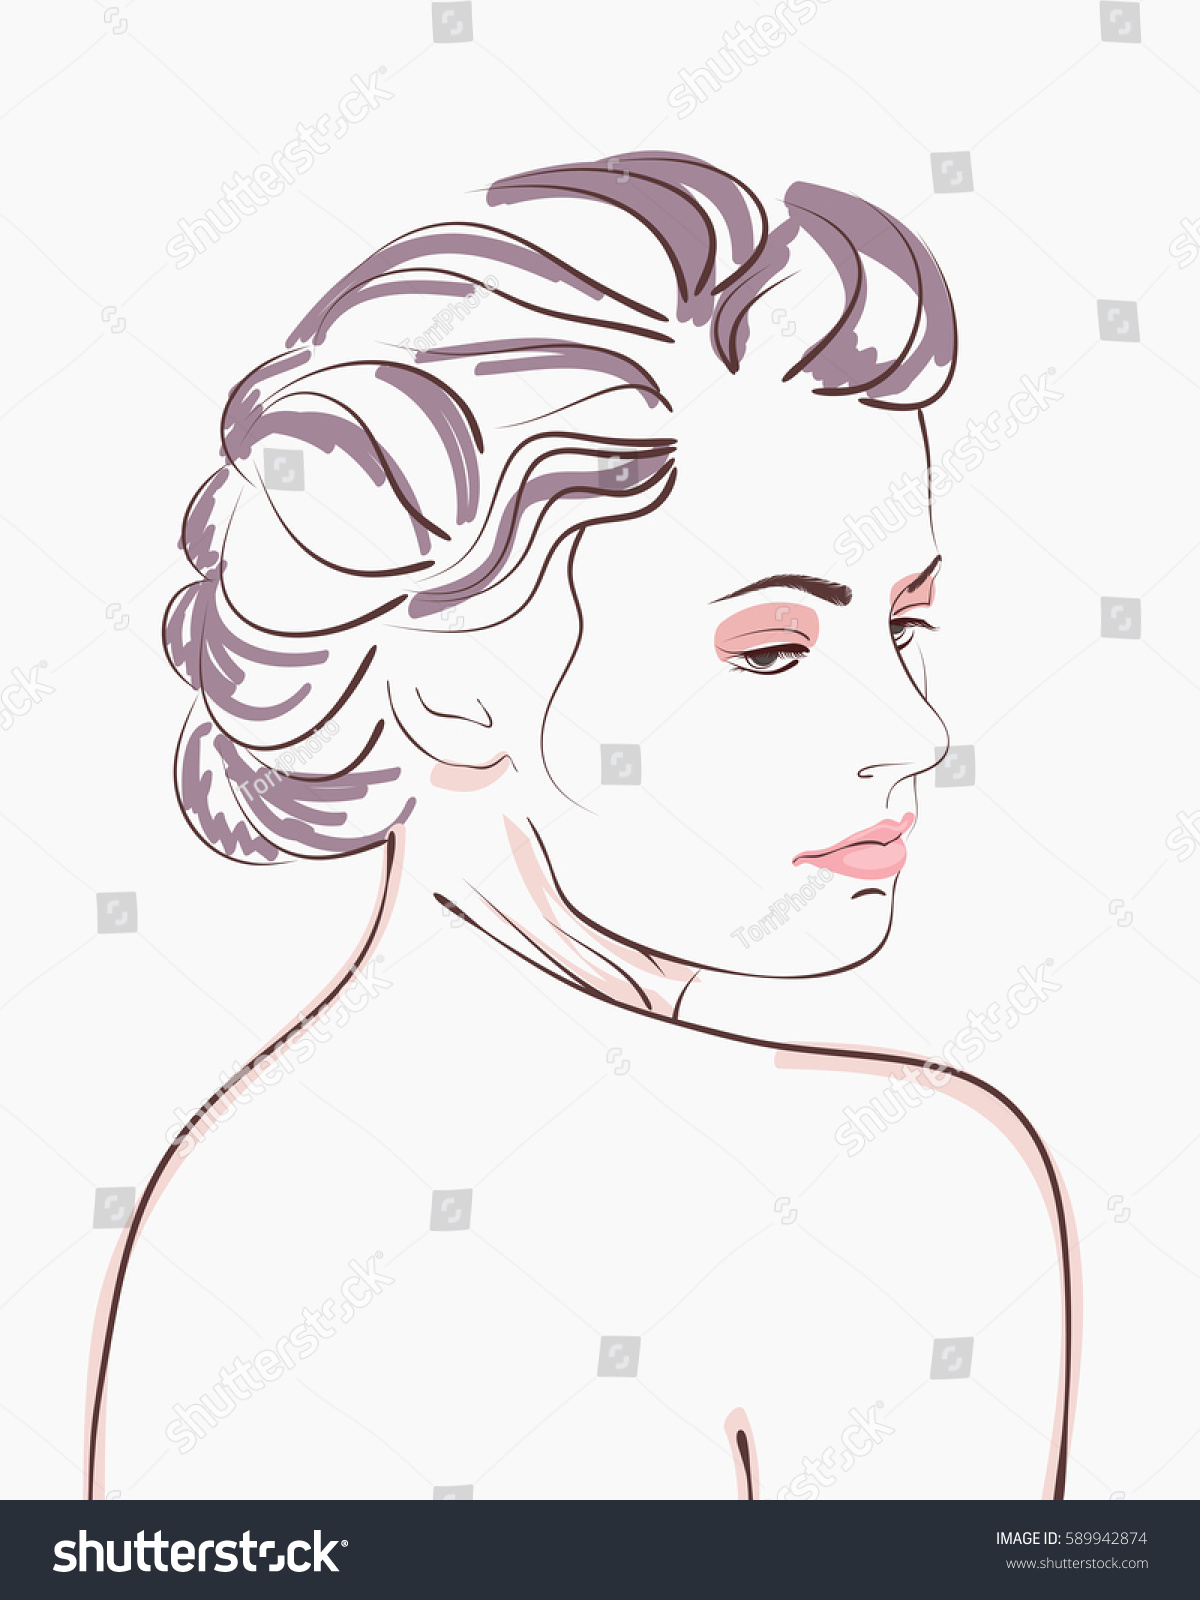 https://www.shutterstock.com/image-vector/vintage-style-woman-portrait-vector-illustration-589942874